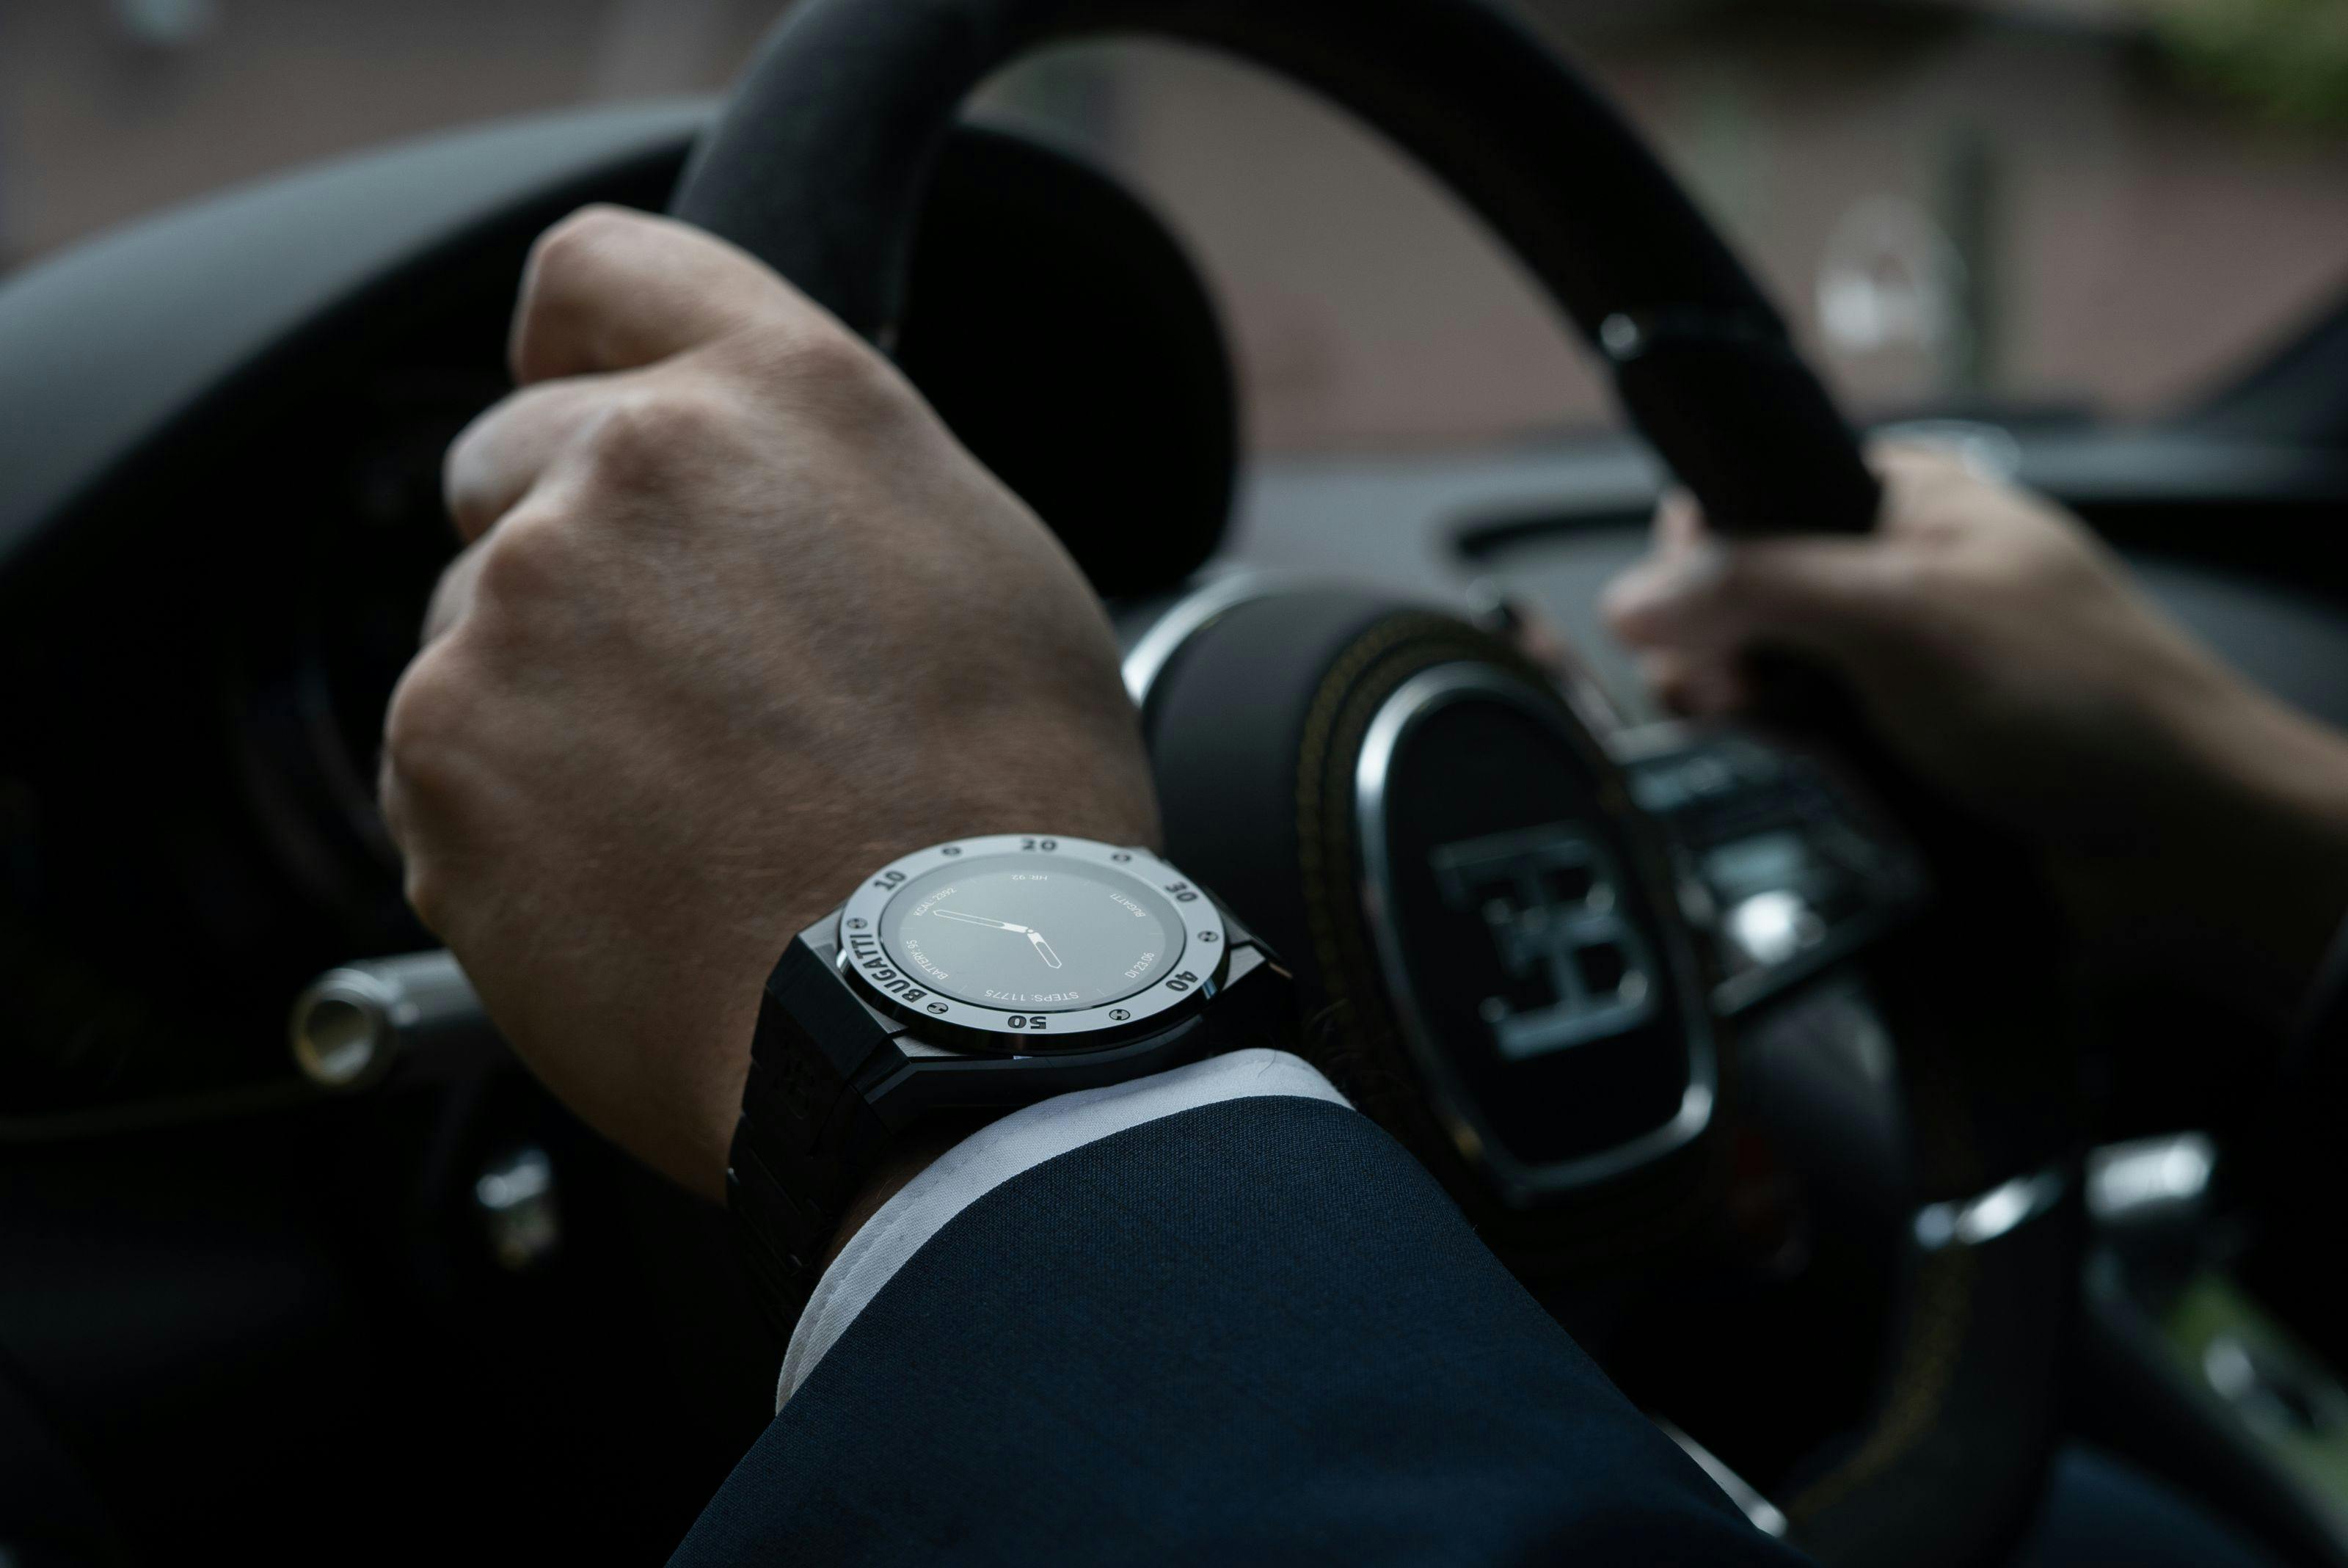 Bugatti creates a smartwatch masterpiece